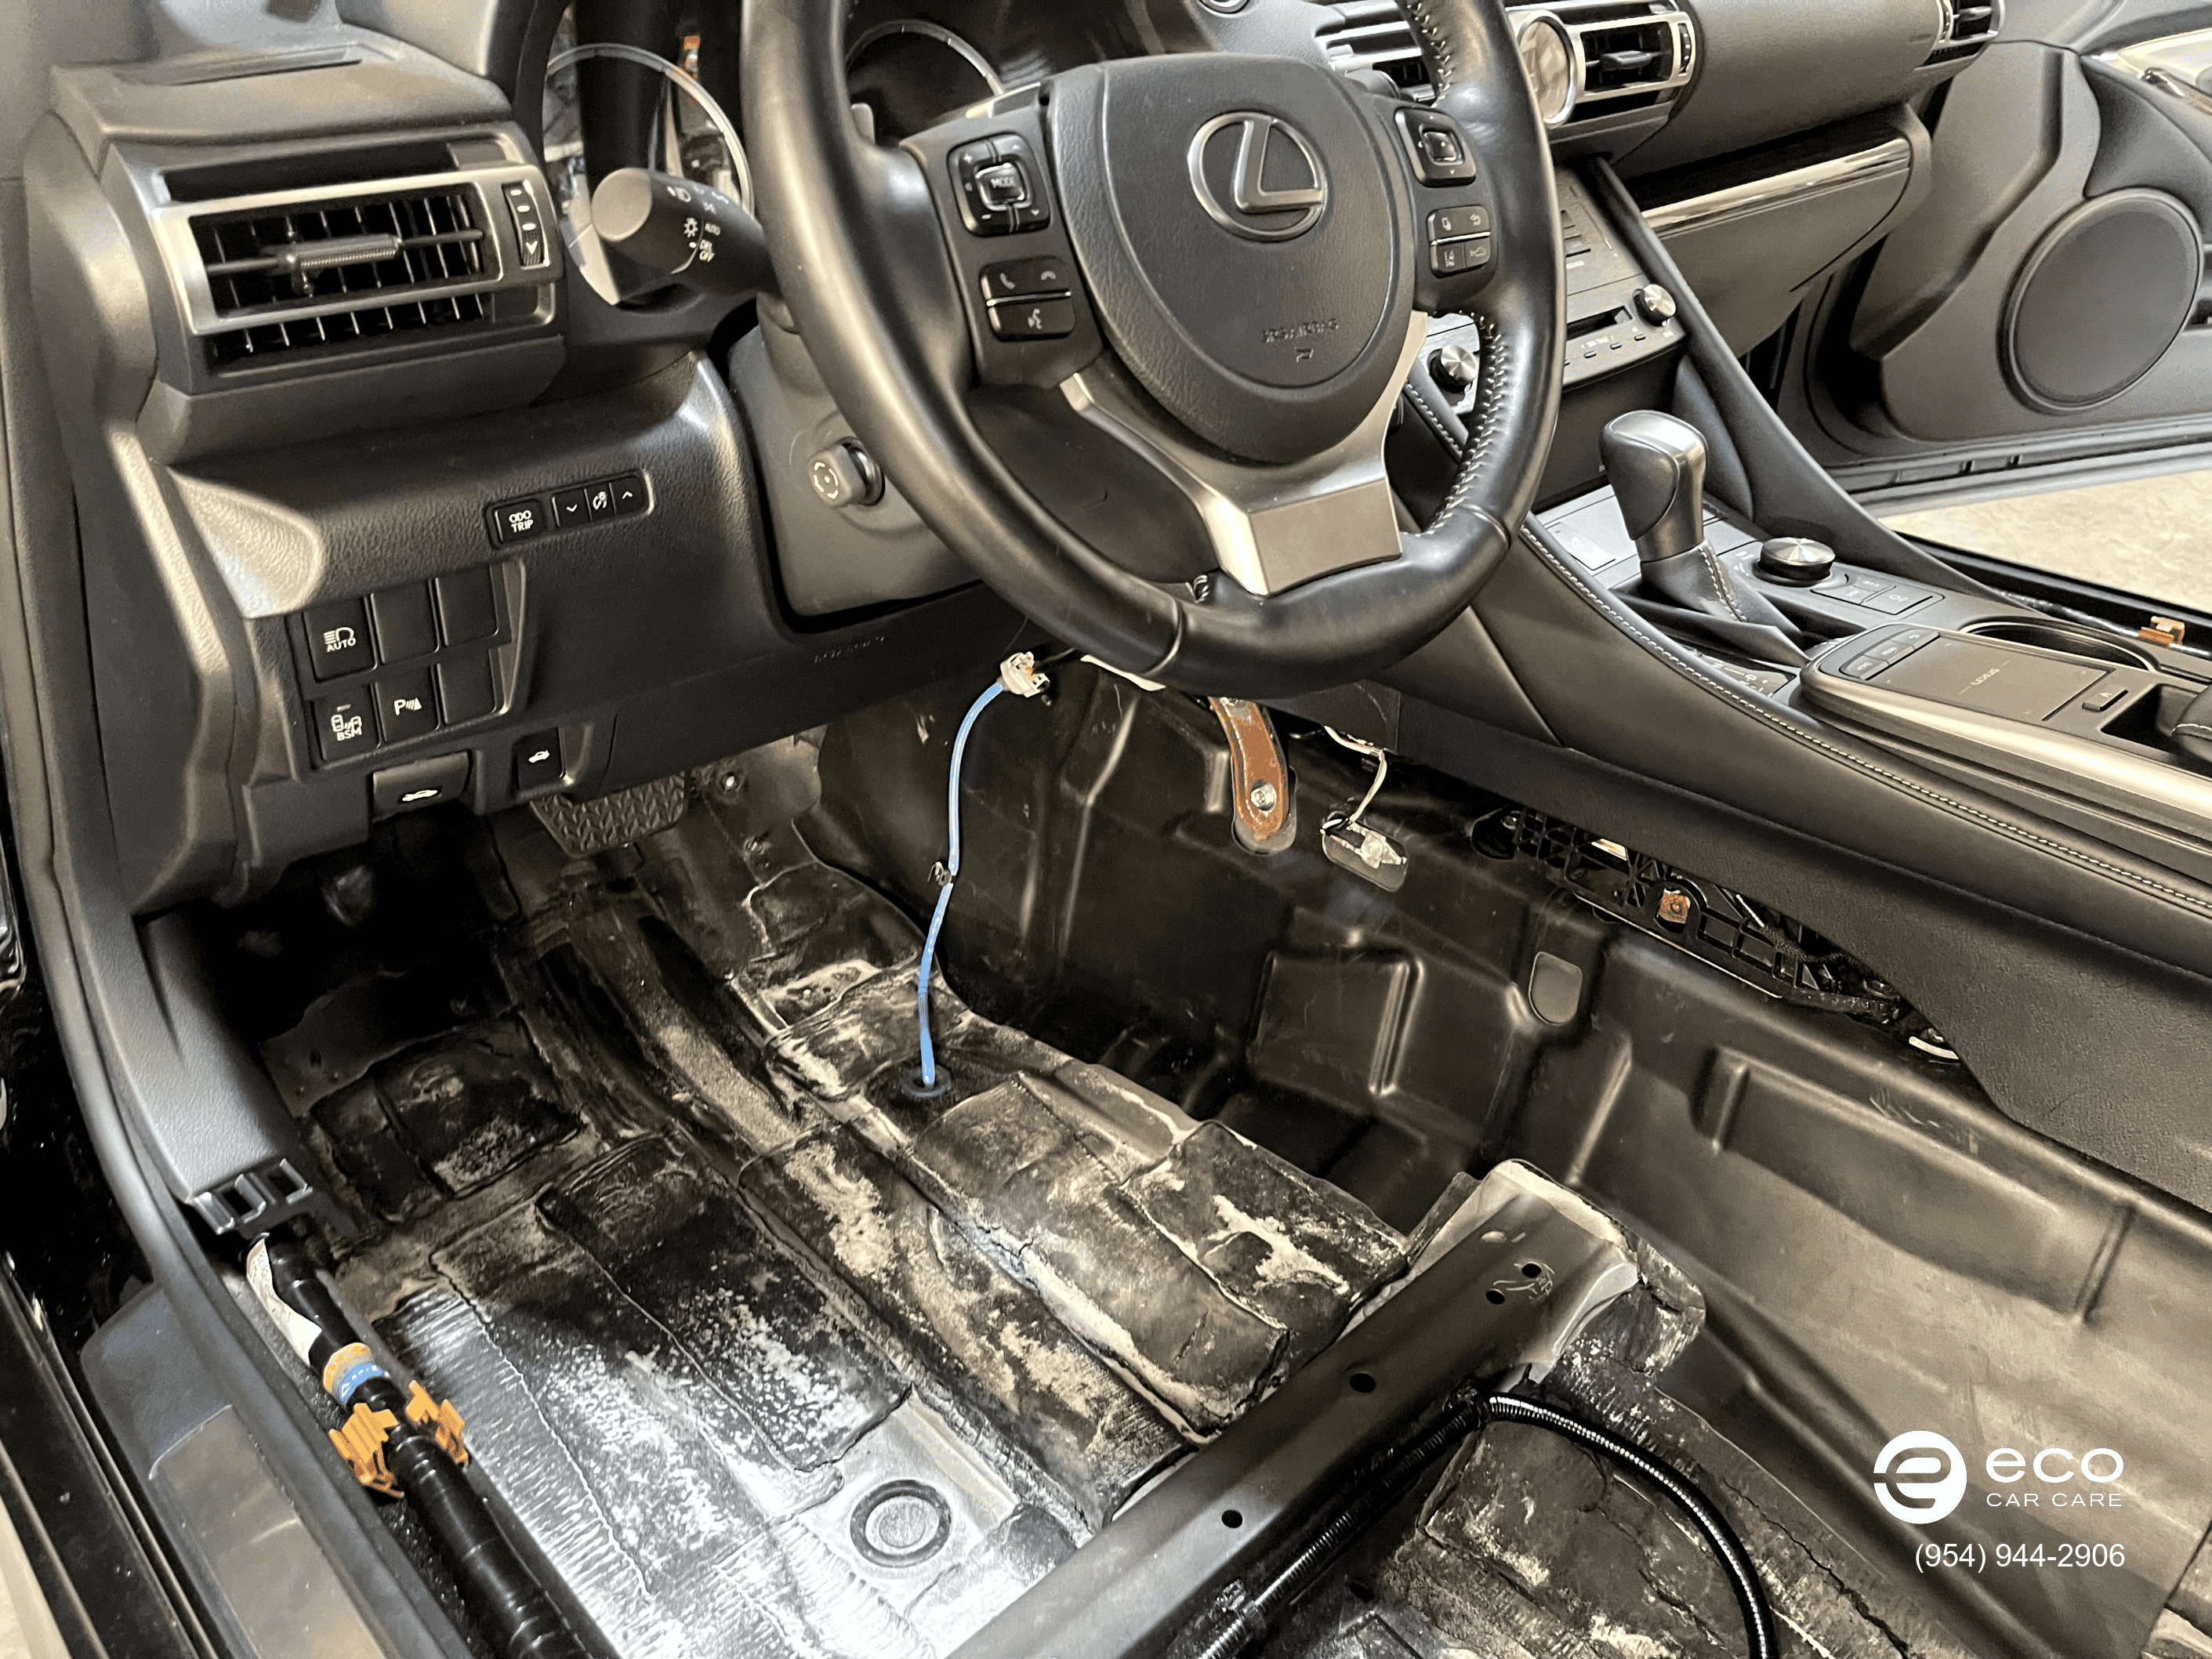 car mold removal severe